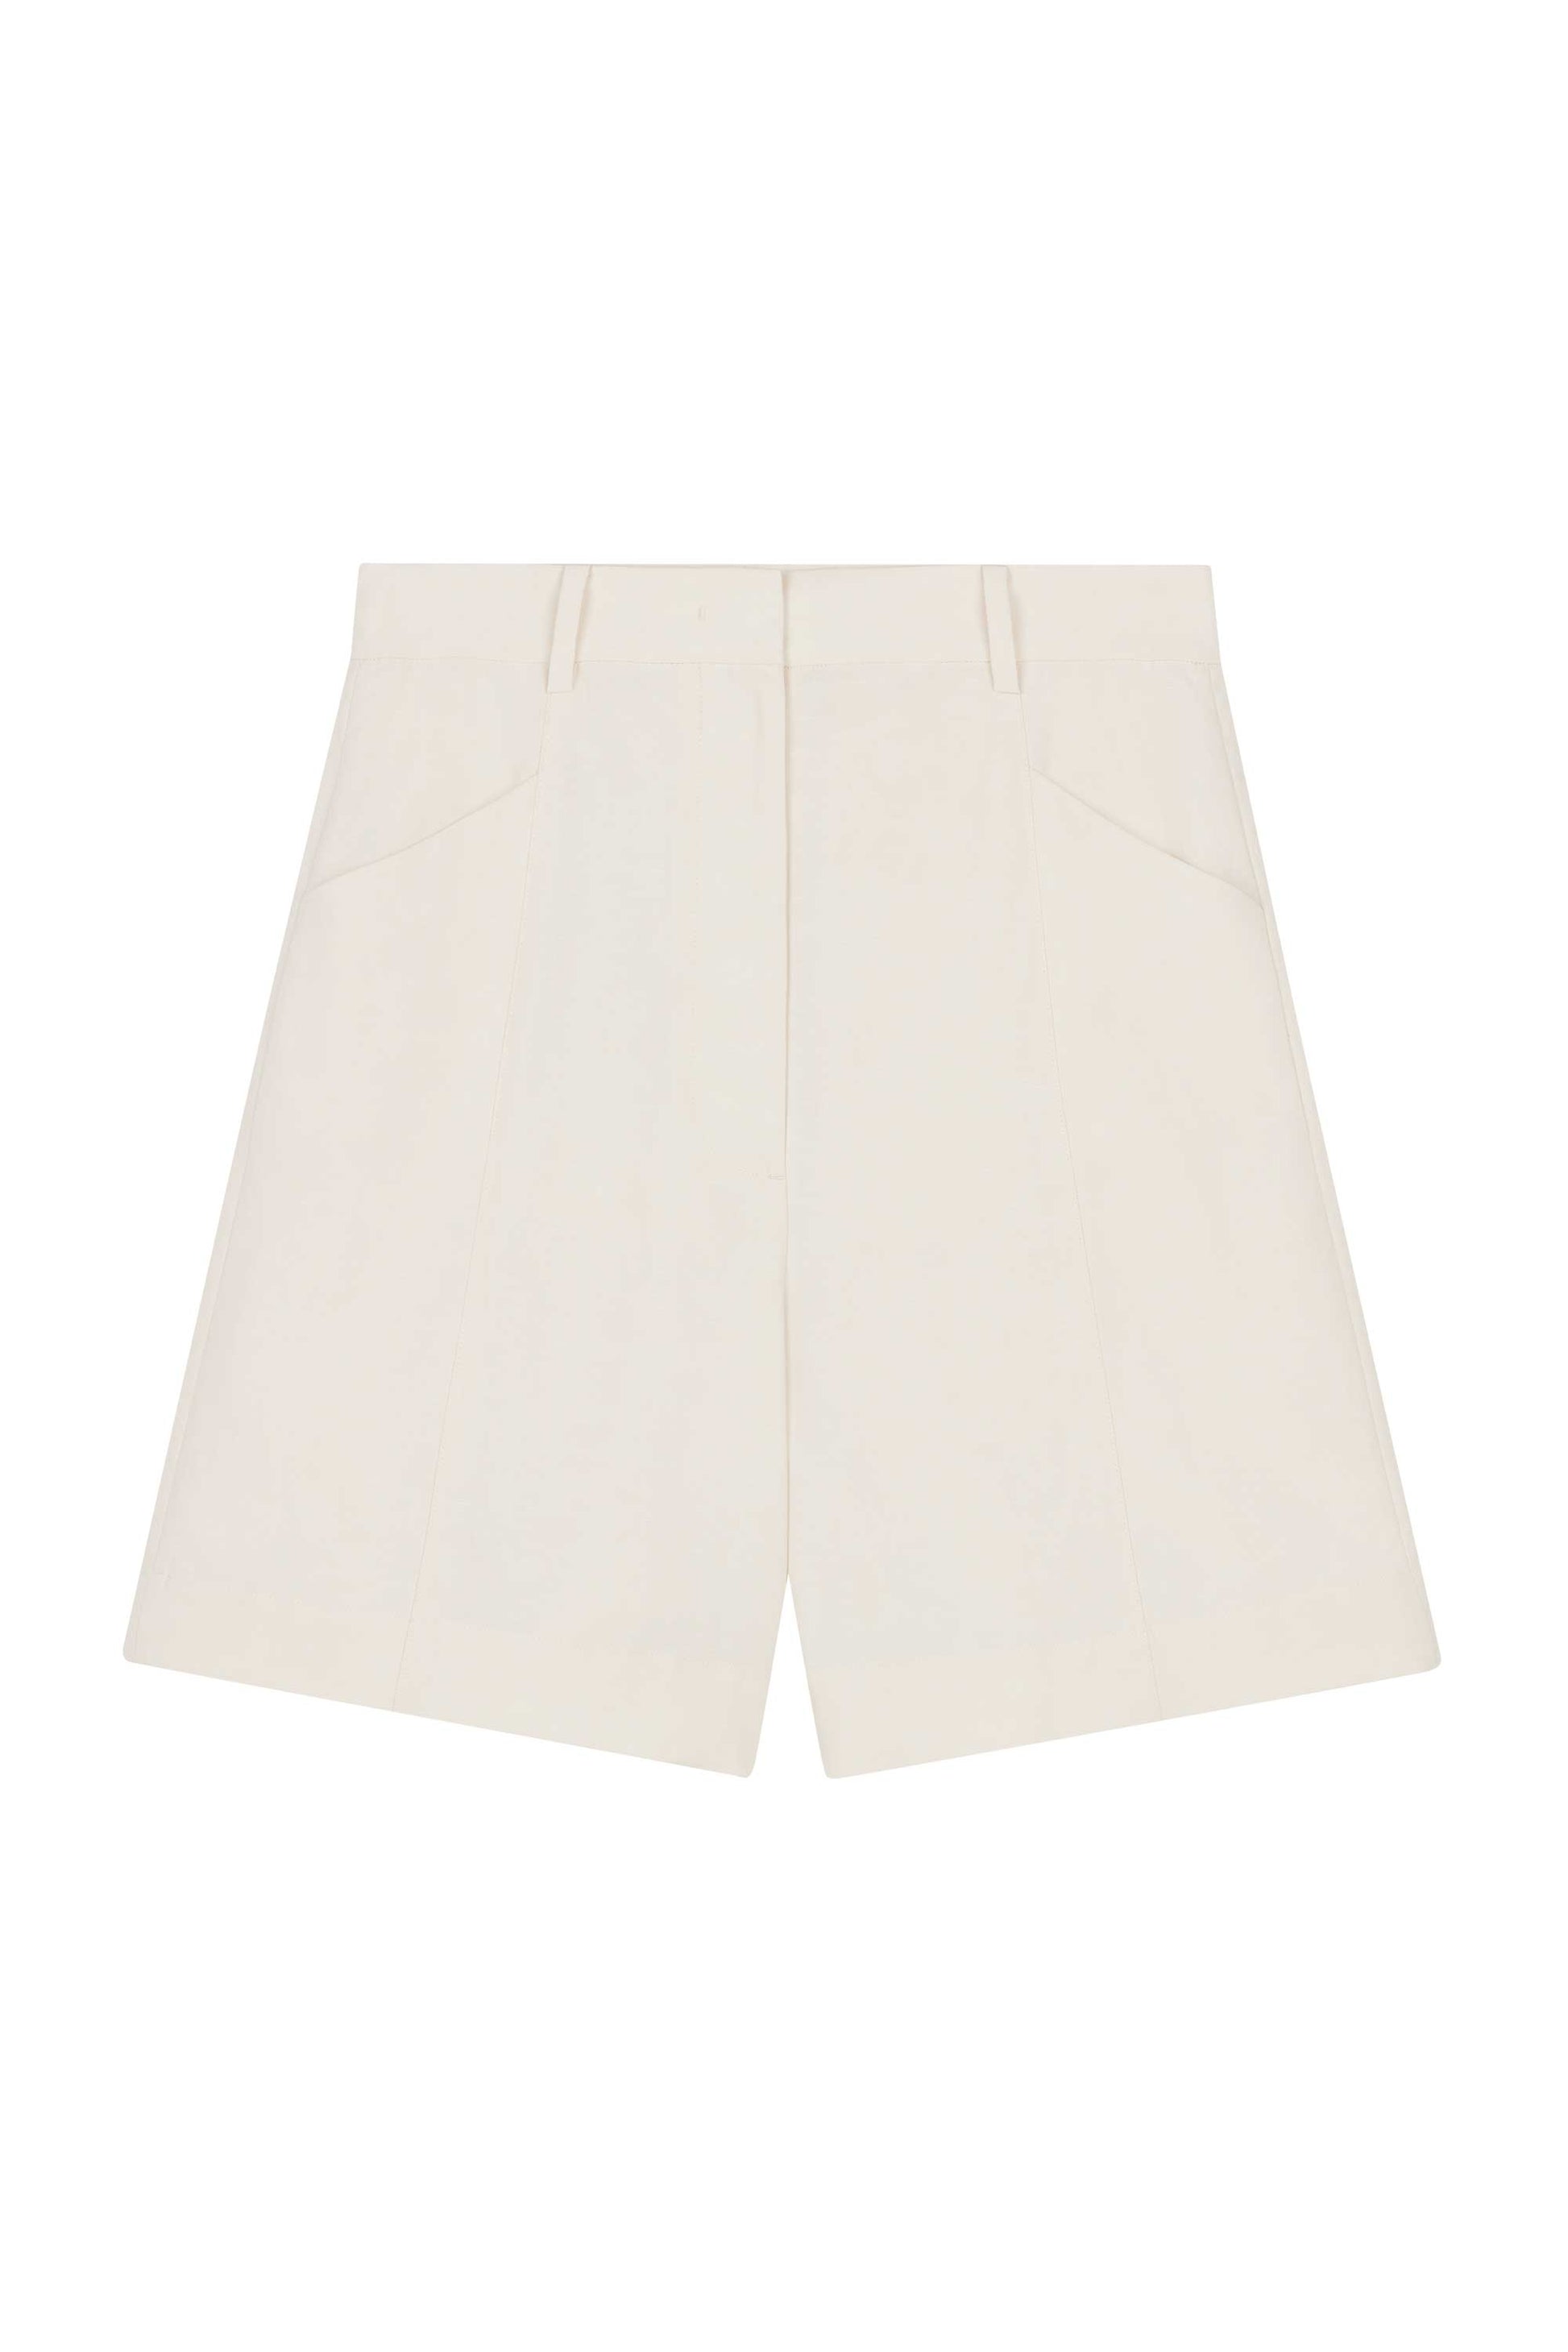 flat lay of white shorts